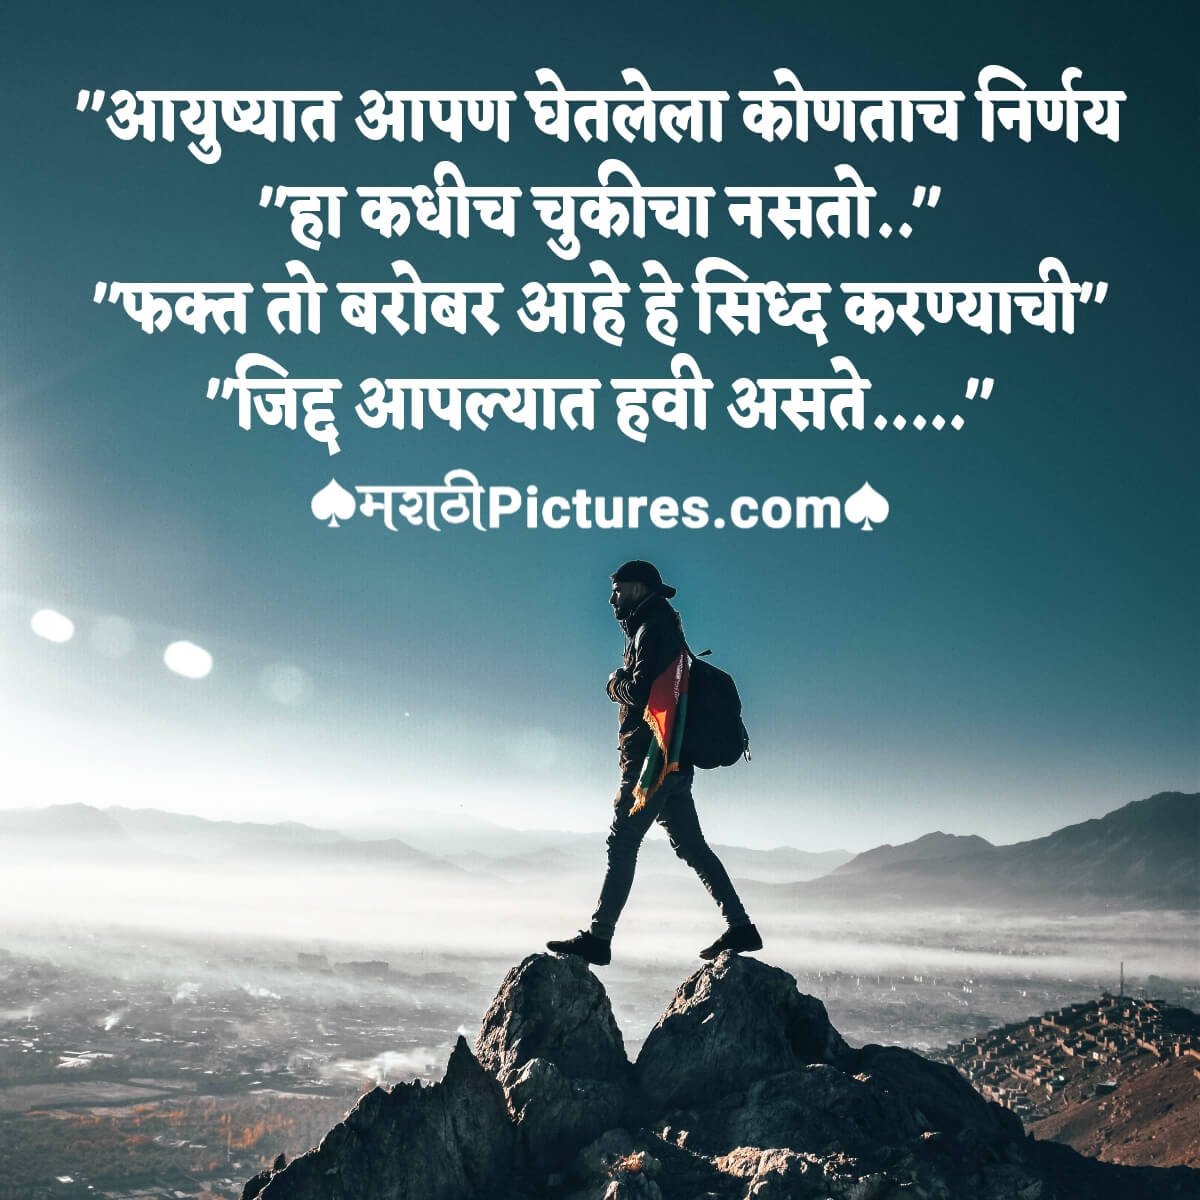 journey quotes in marathi